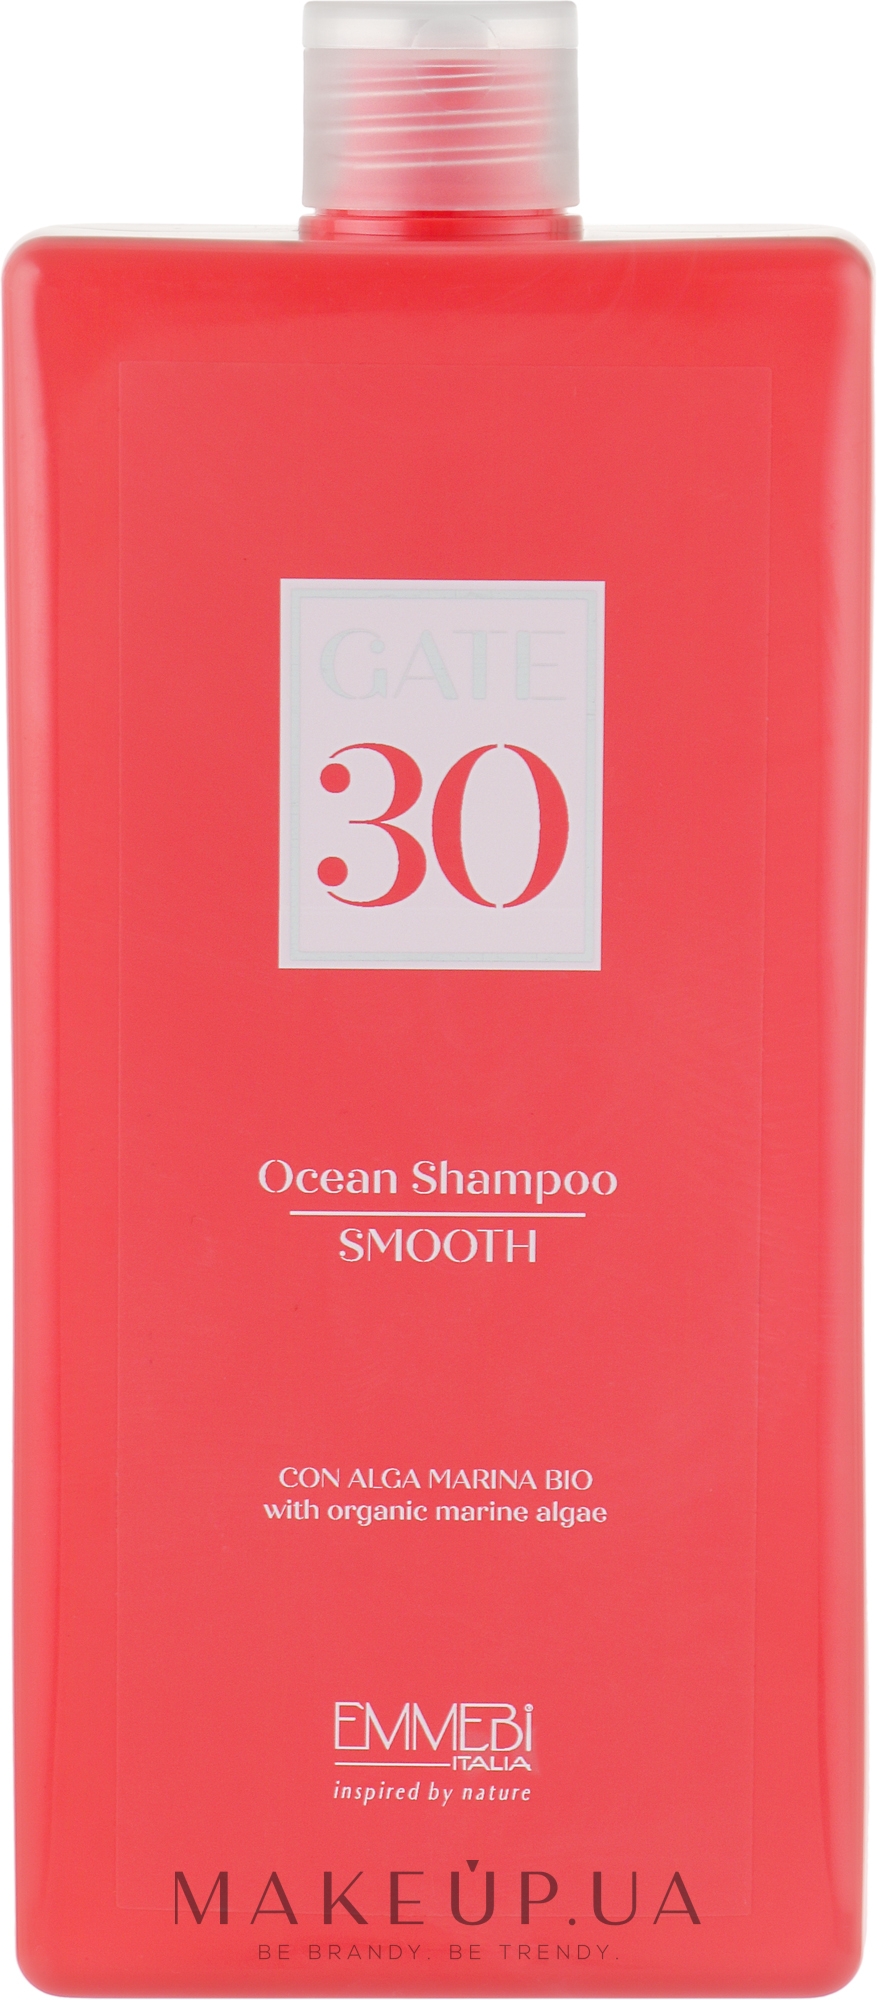 Вирівнювальний шампунь для волосся - Emmebi Italia Gate 30 Wash Ocean Shampoo Smooth — фото 1000ml